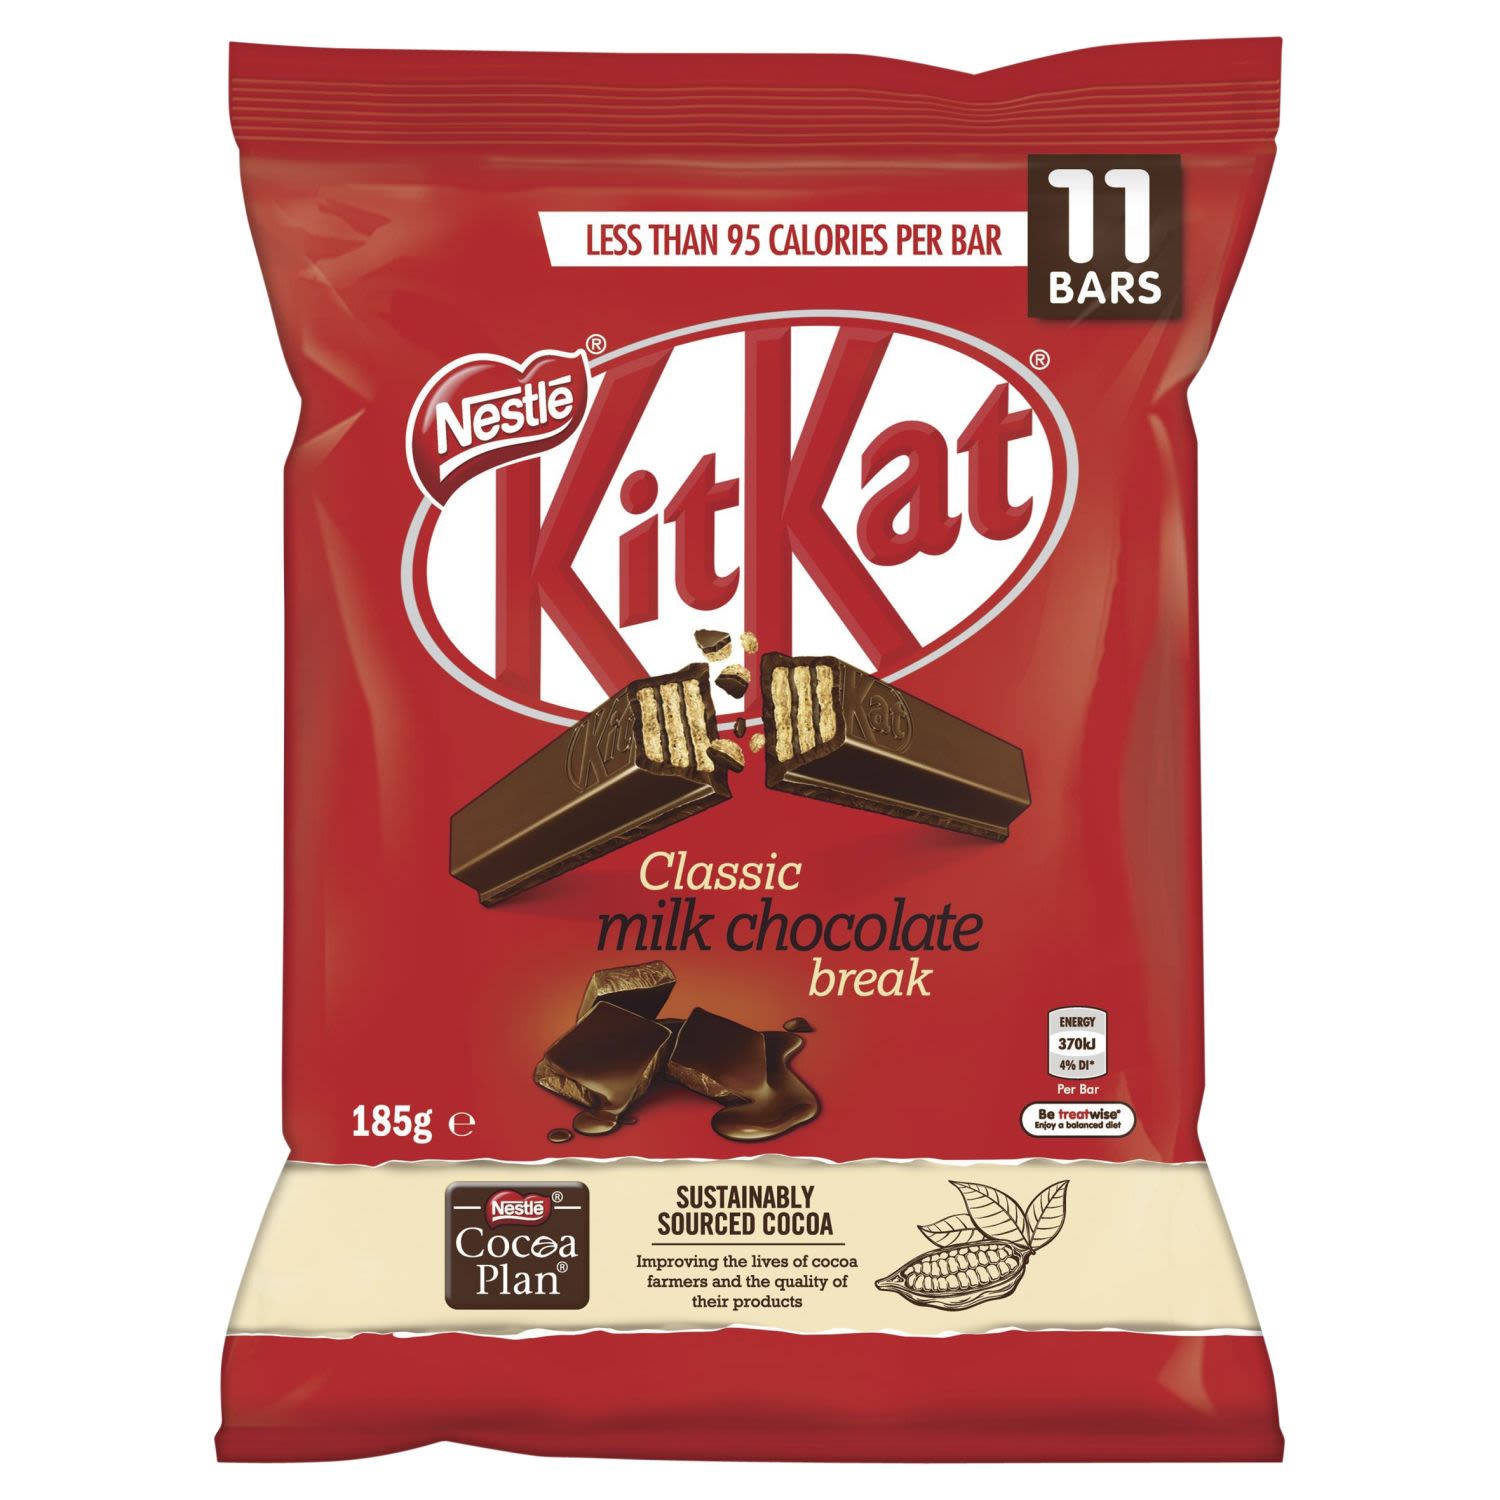 Nestlé KitKat Original, 11 Each